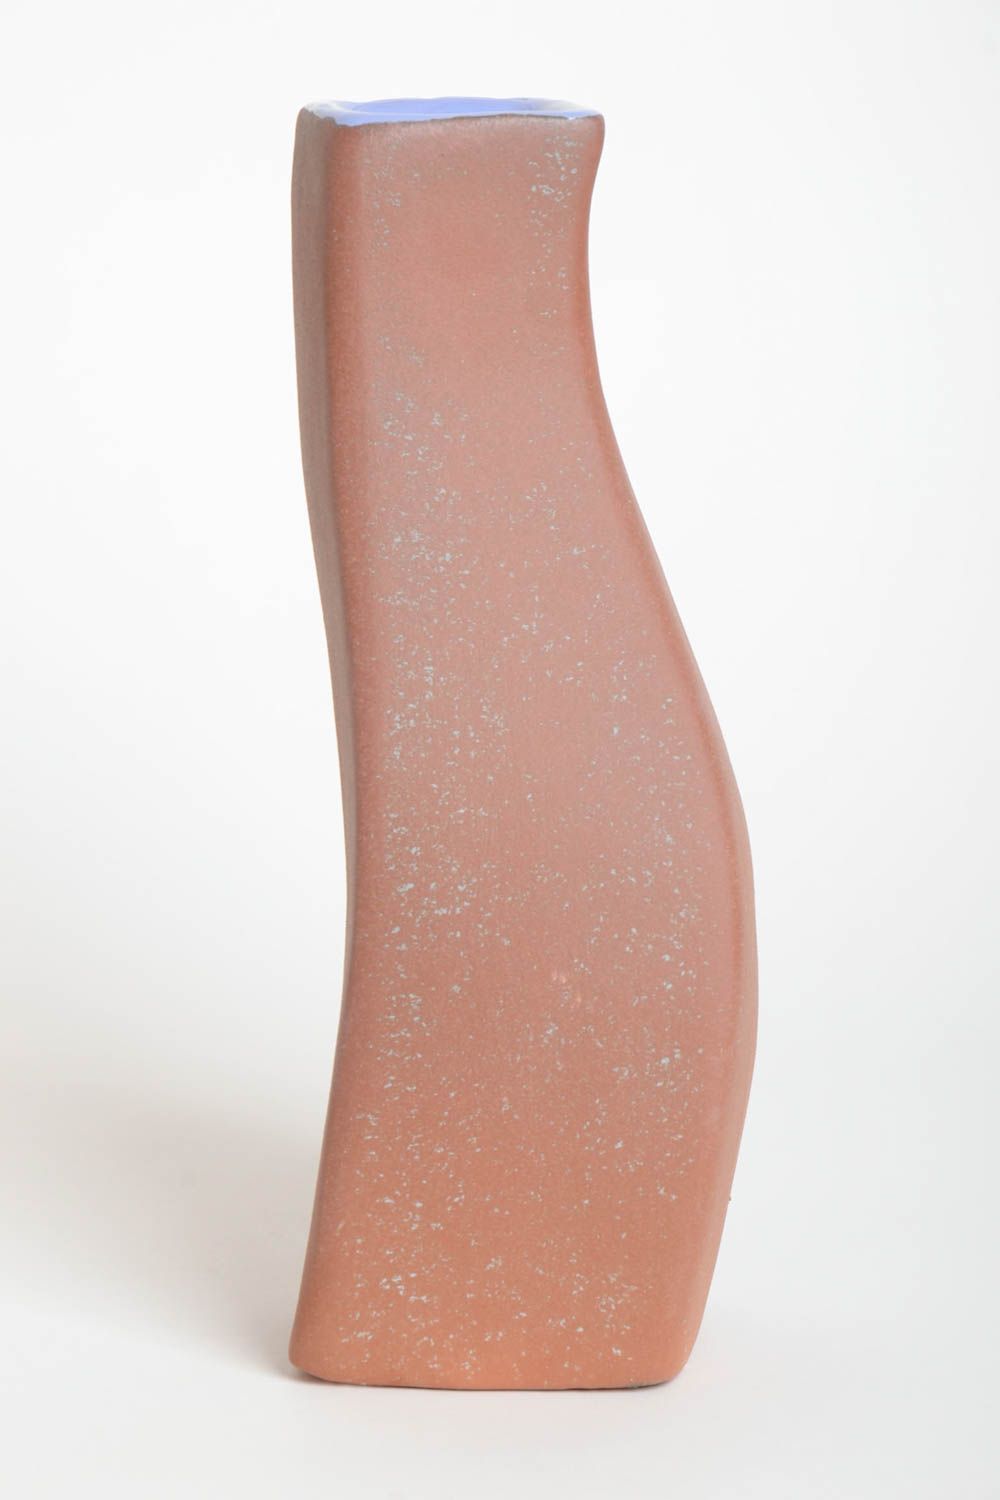 12 inches ceramic art style decorative vase 2 lb photo 4